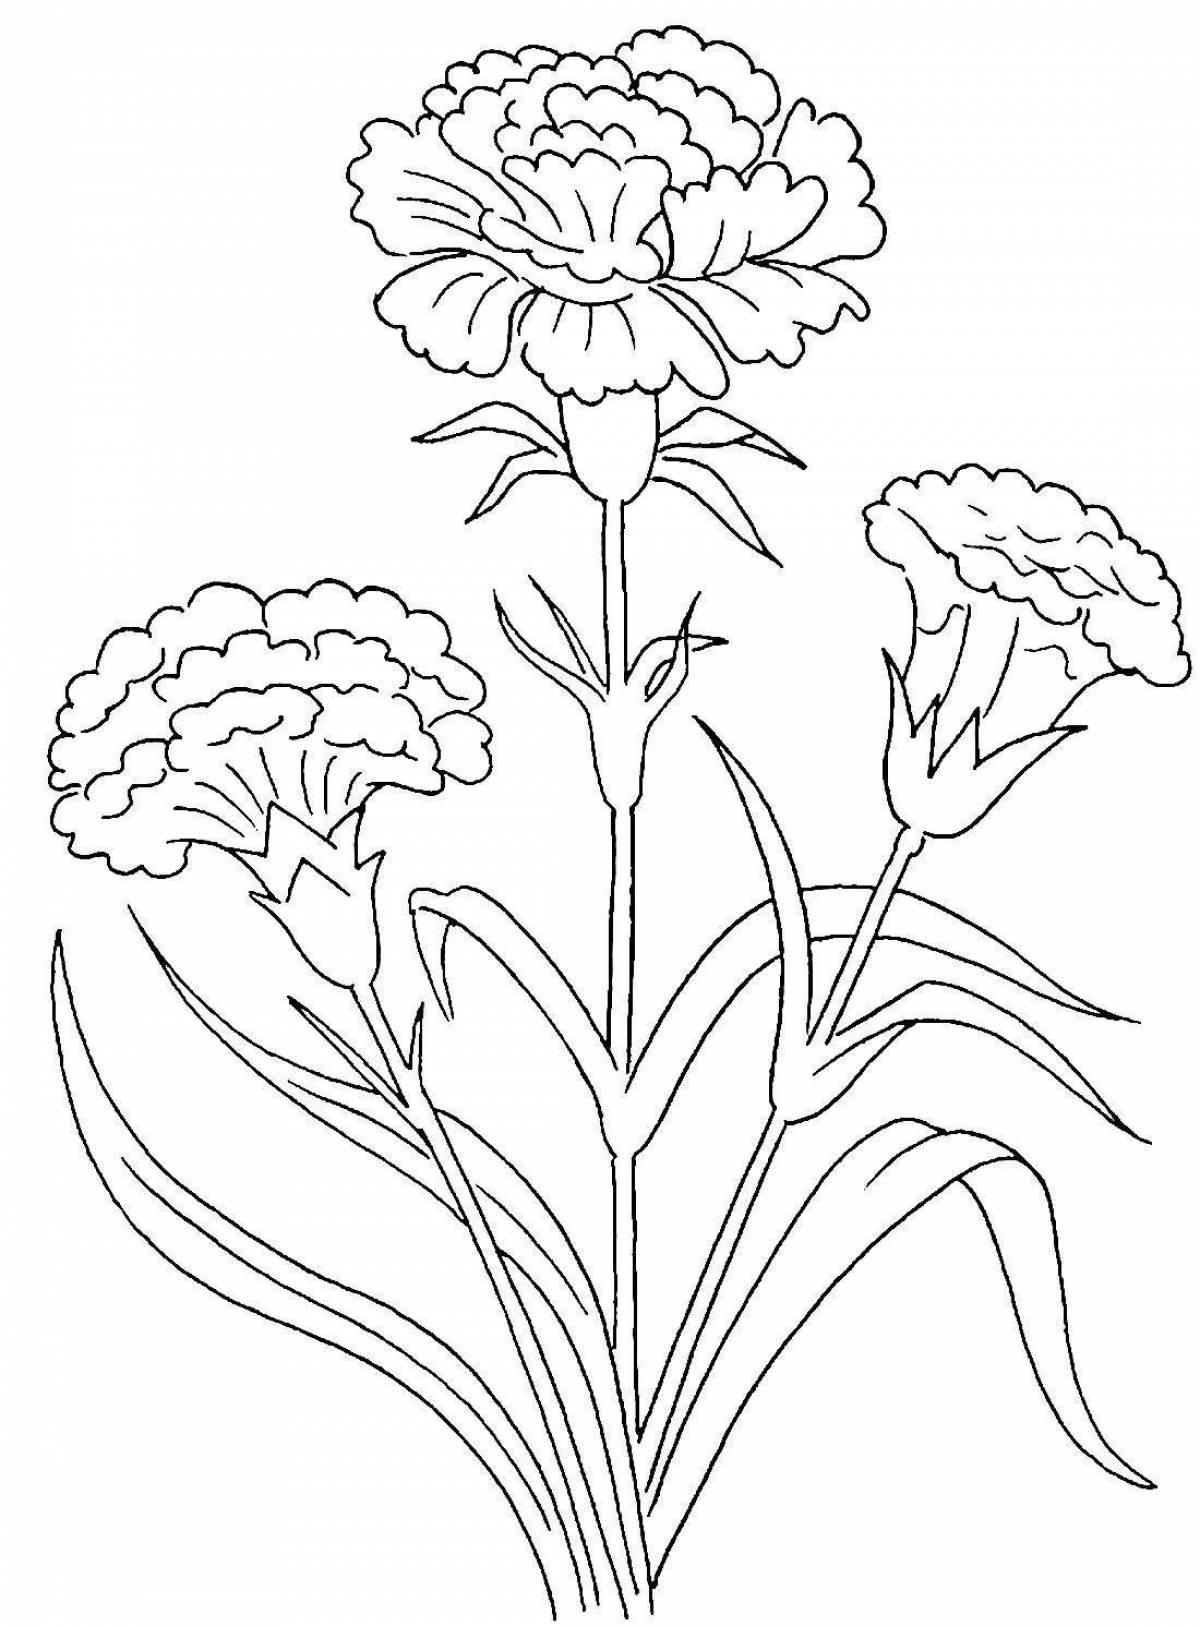 Coloring book elegant carnation pattern